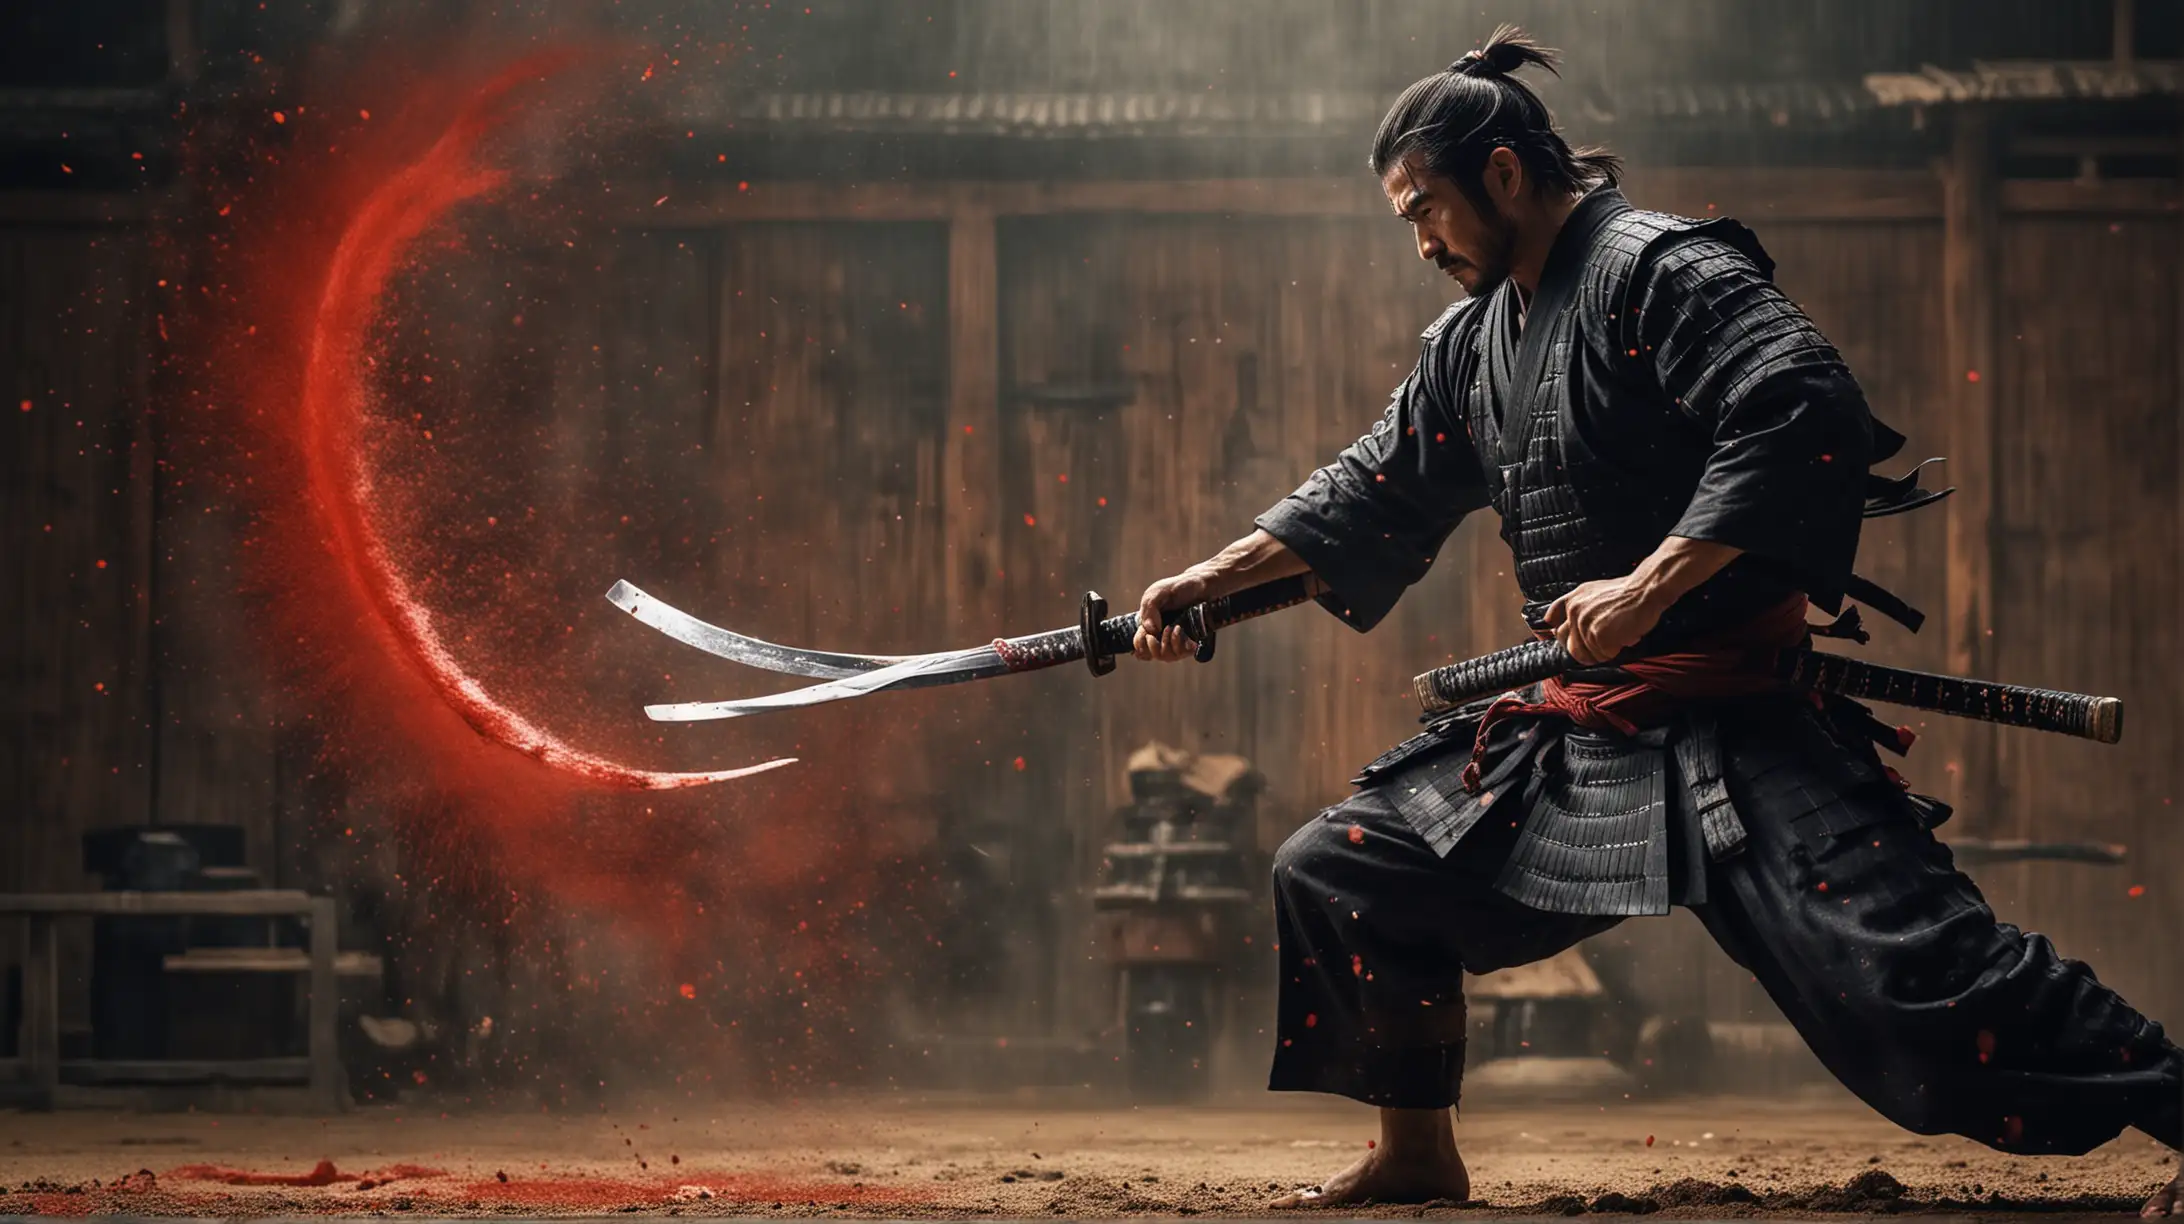 Shogun fighting with samurai blade. Lots of blood, samurai era background 